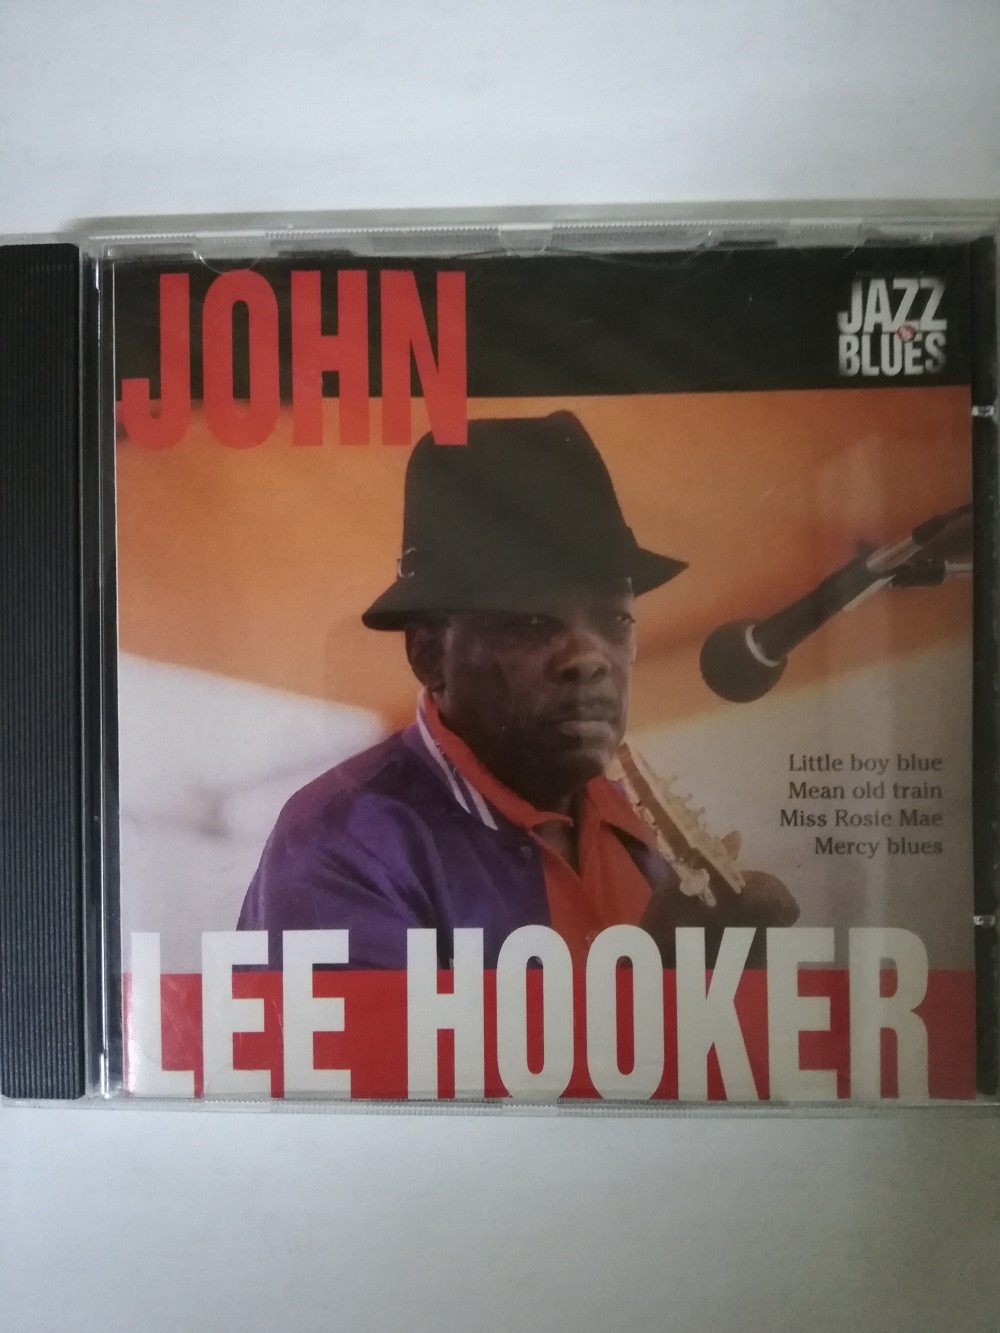 Imagen CD JOHN LEE HOOKER - JAZZ & BLUES COLLECTION 1